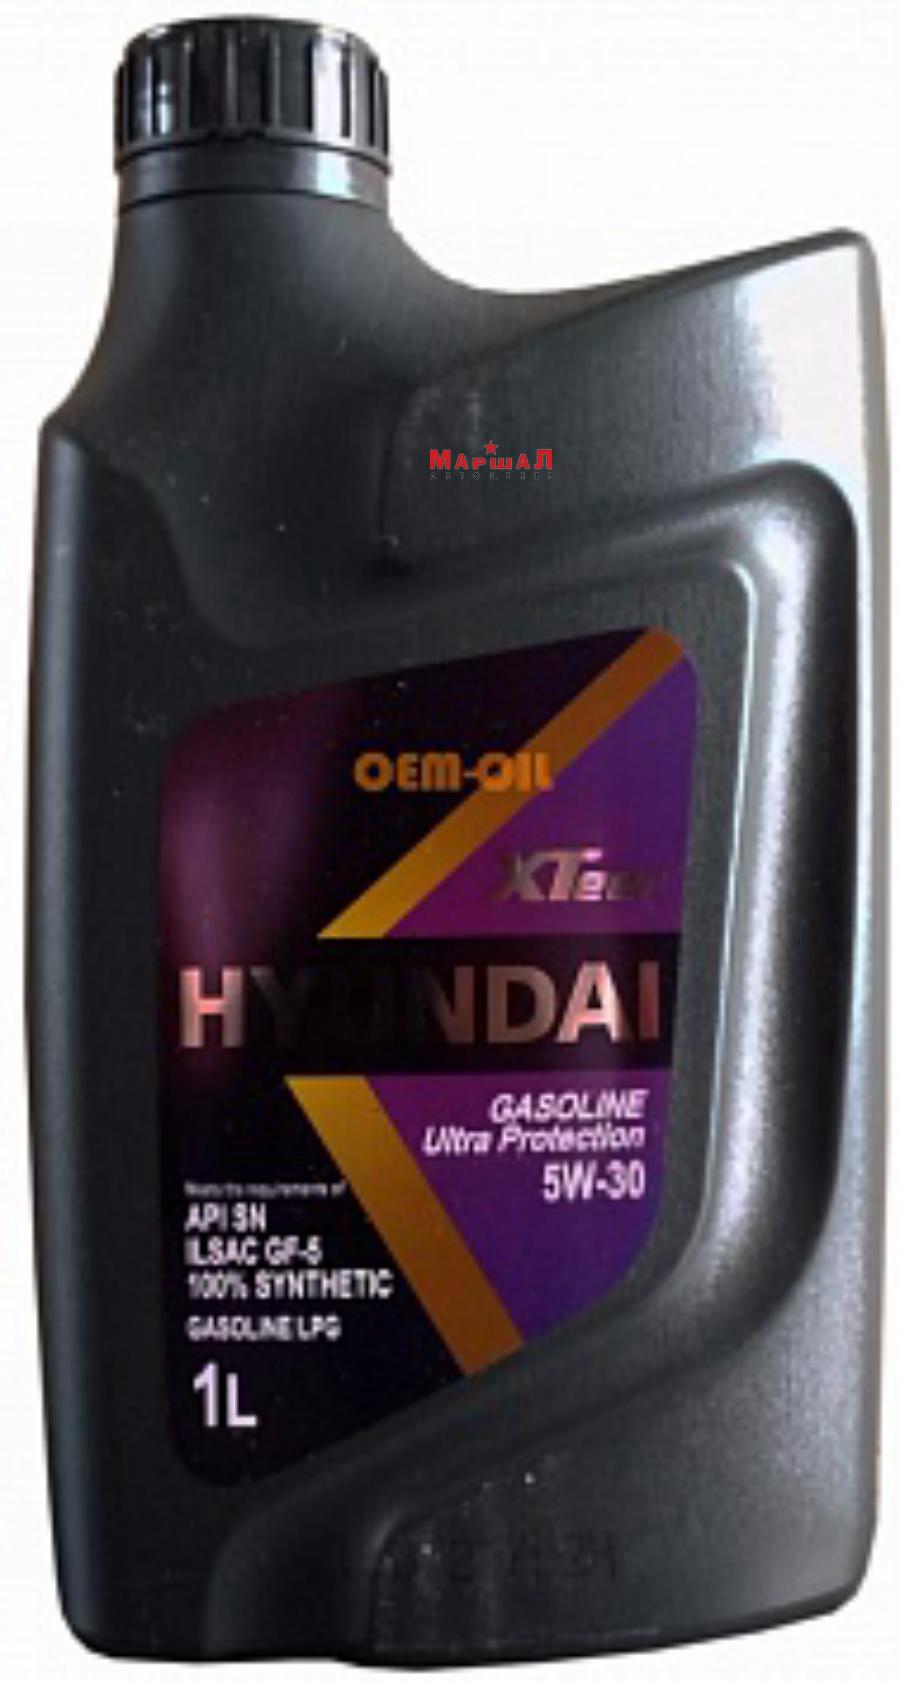 HYUNDAI XTeer Gasoline Ultra Protection 5W-30